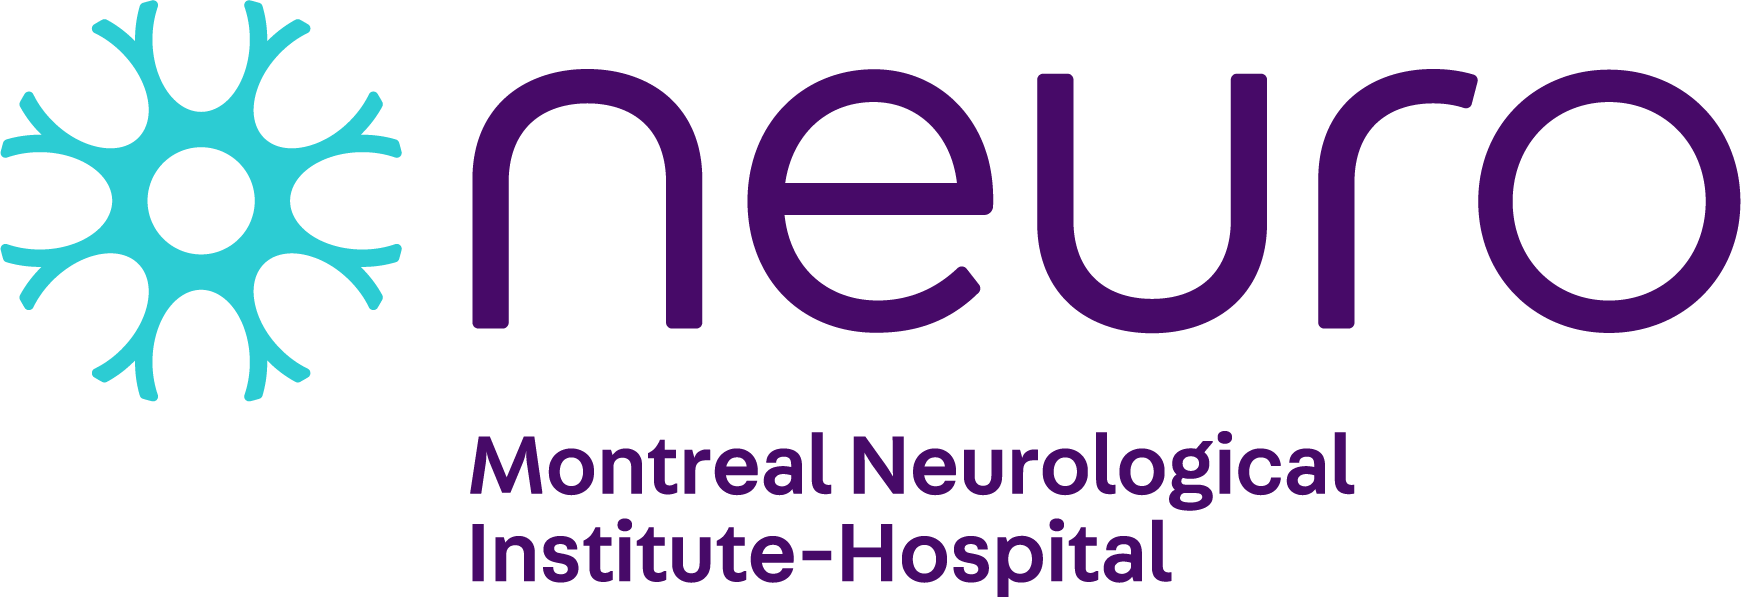 Montreal Neurological Institute-Hospital logo